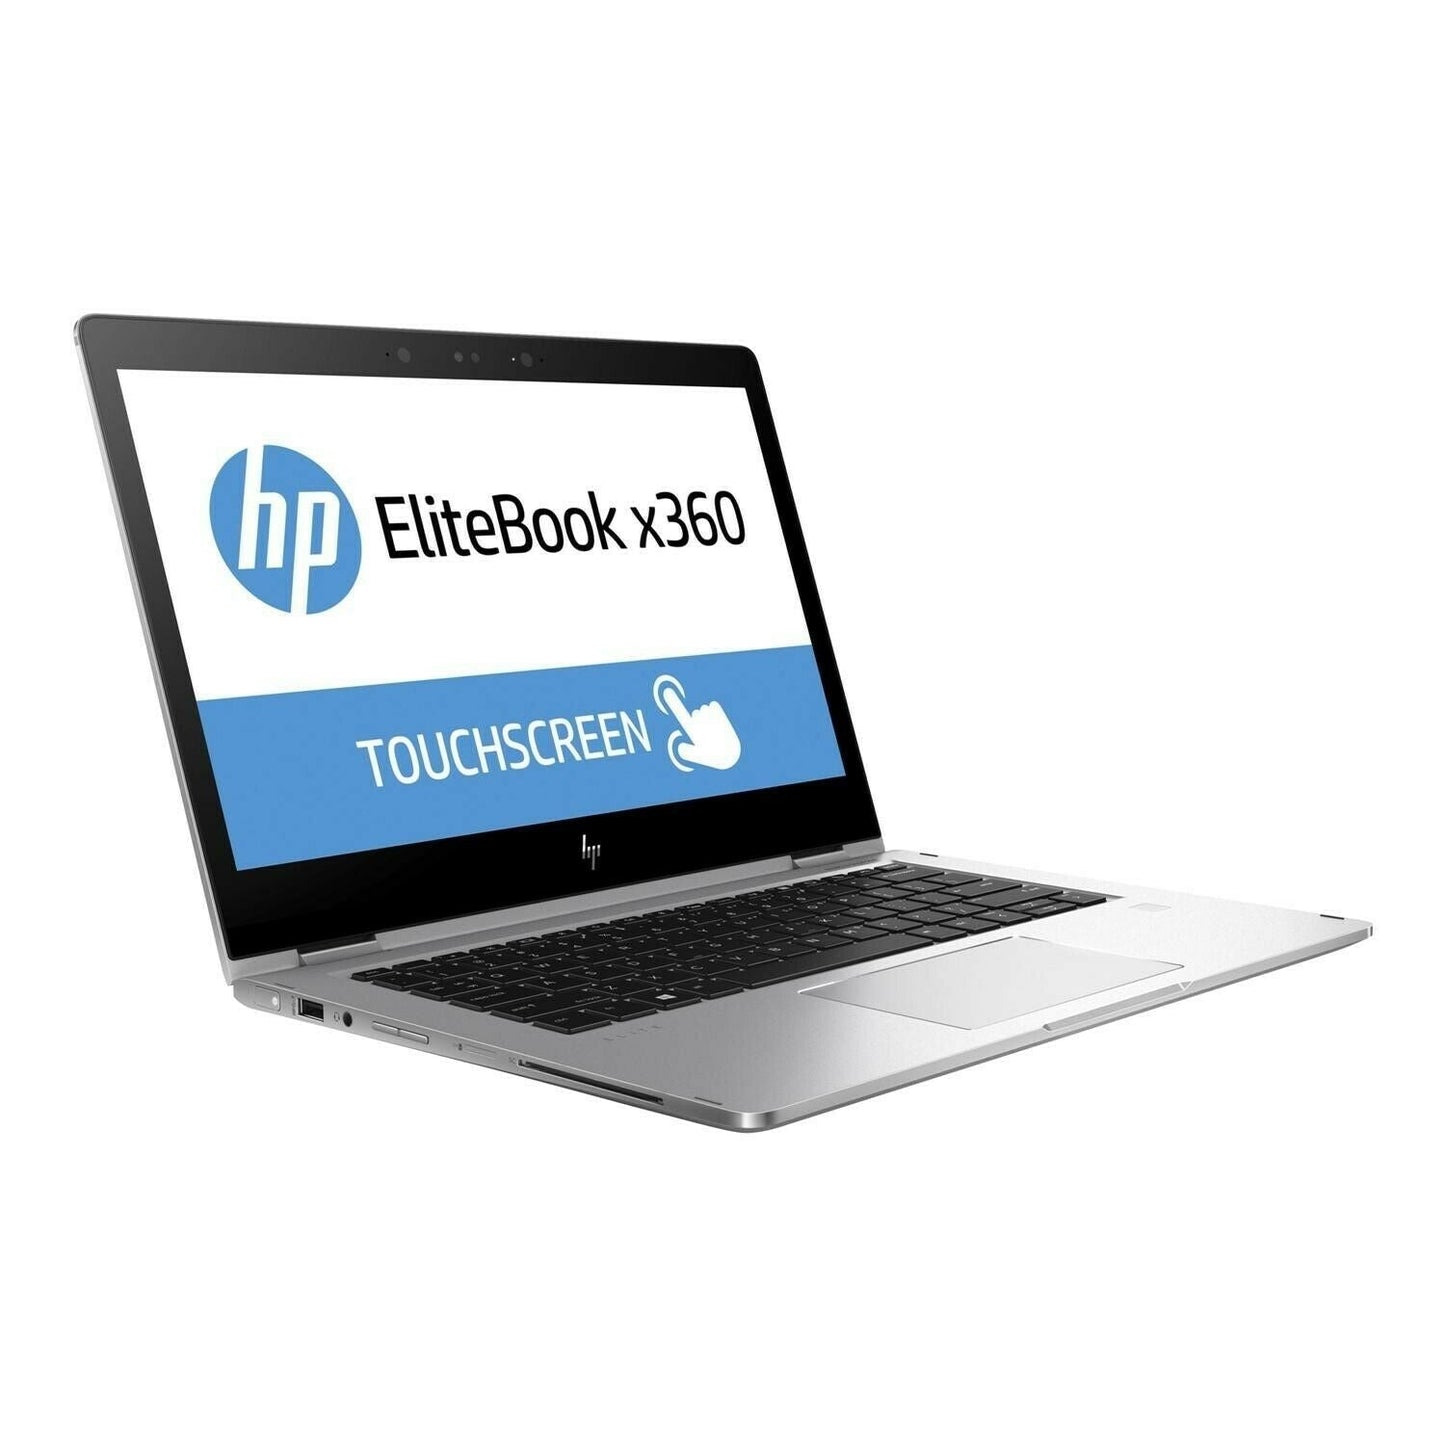 HP EliteBook x360 Core i5-8350U 16GB